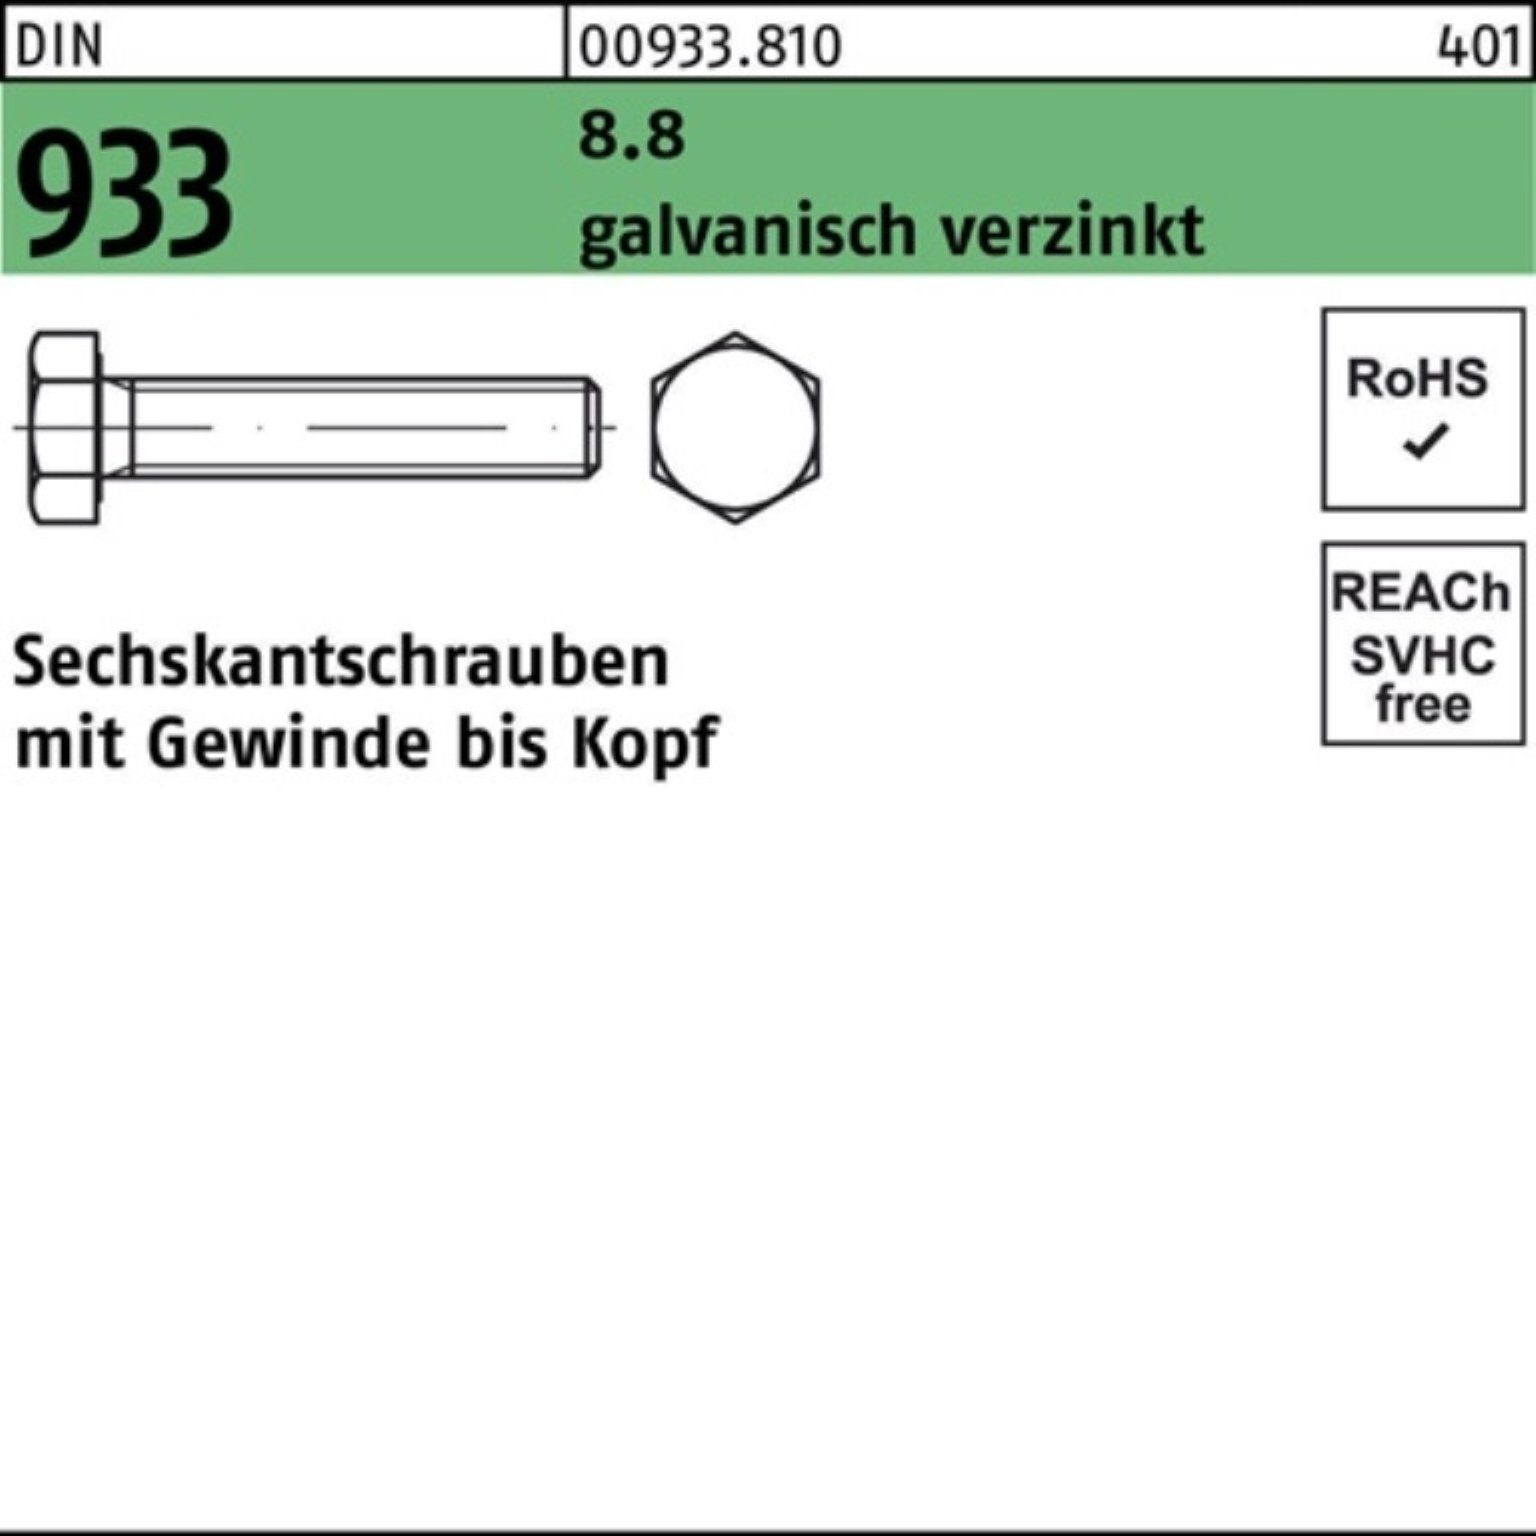 Sechskantschraube Reyher Pack 8.8 933 Sechskantschraube DIN 25 VG 100er galv.verz. Stü M24x 85